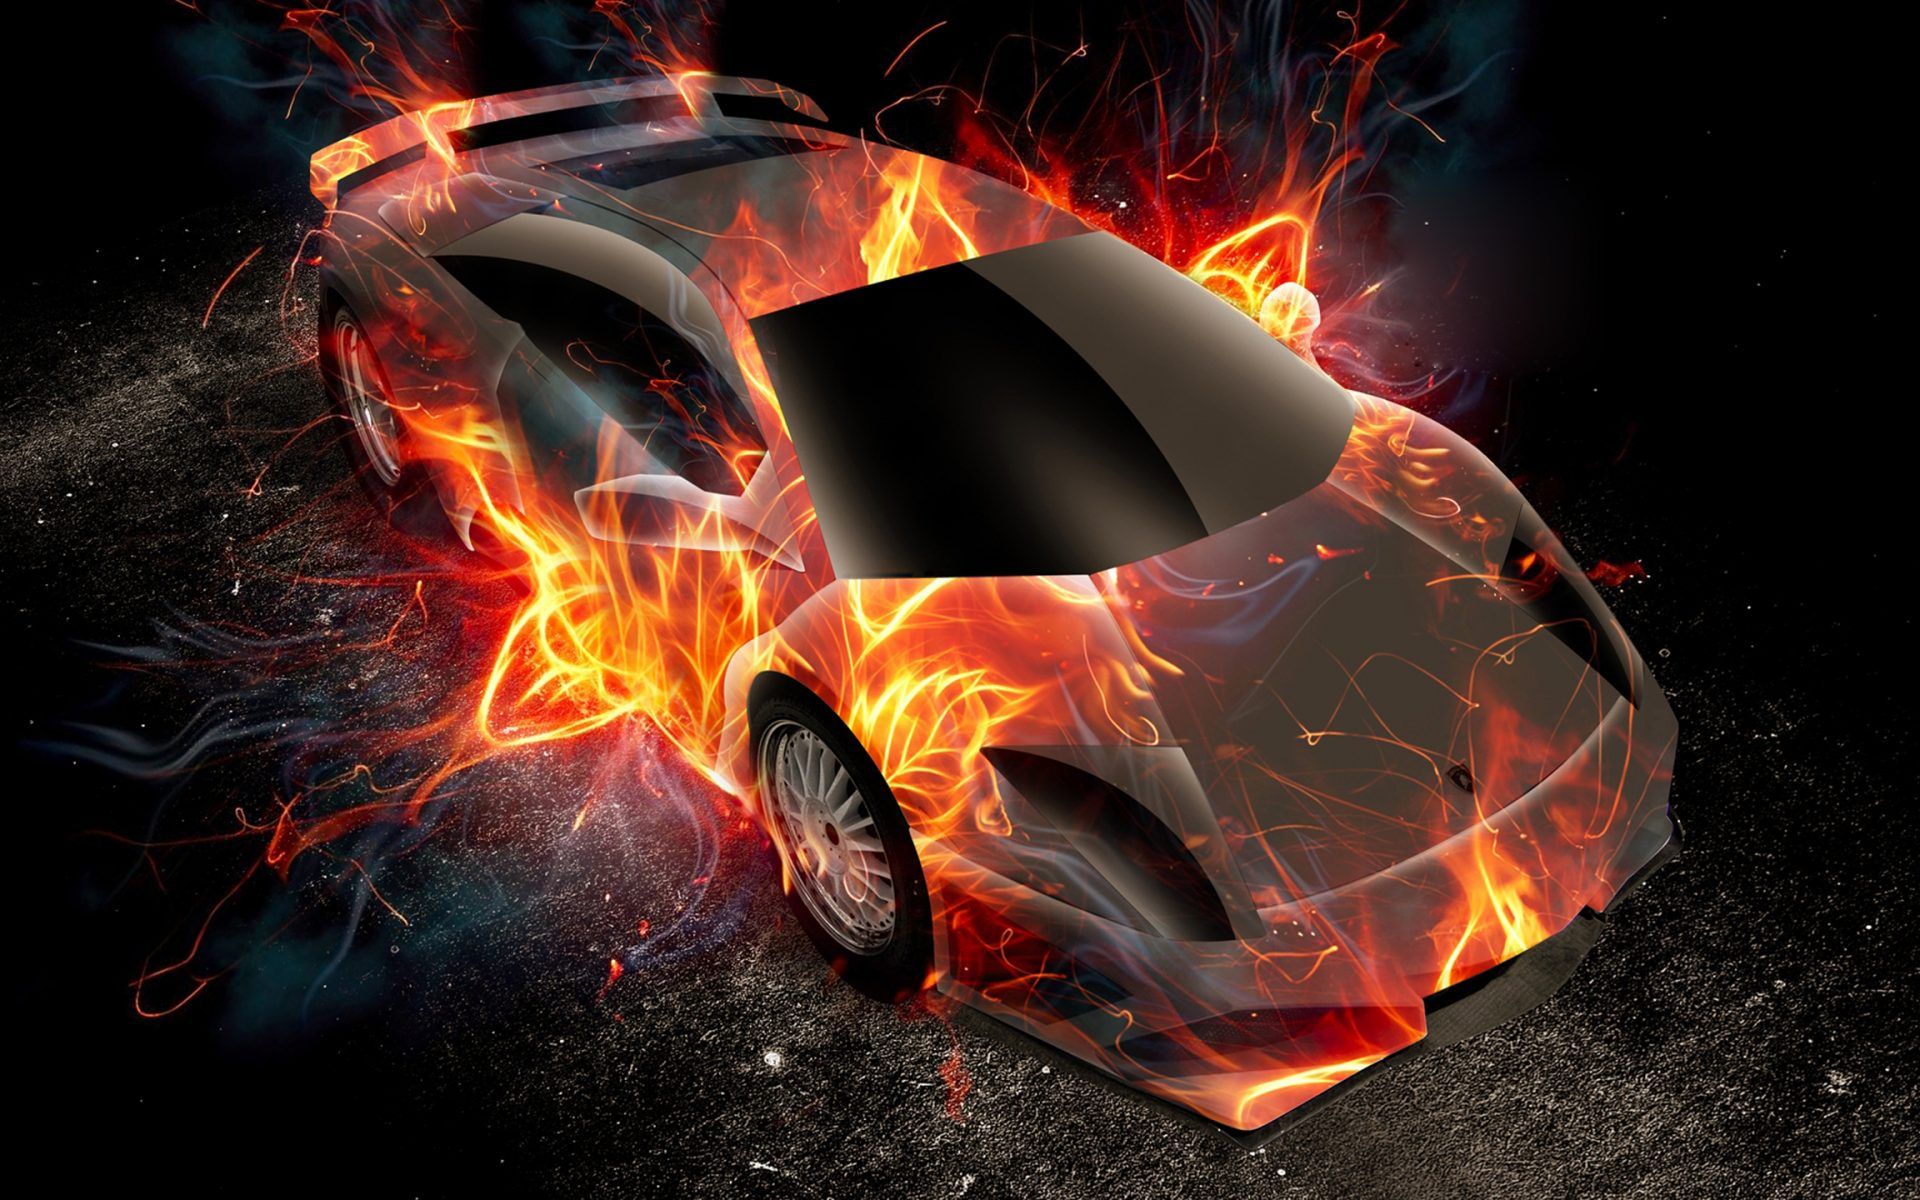 Lamborghini Flame Fantasy World Famous Car Design Wallpaper For Pc Tablet And Mobile Download 2560x1440, Wallpaper13.com